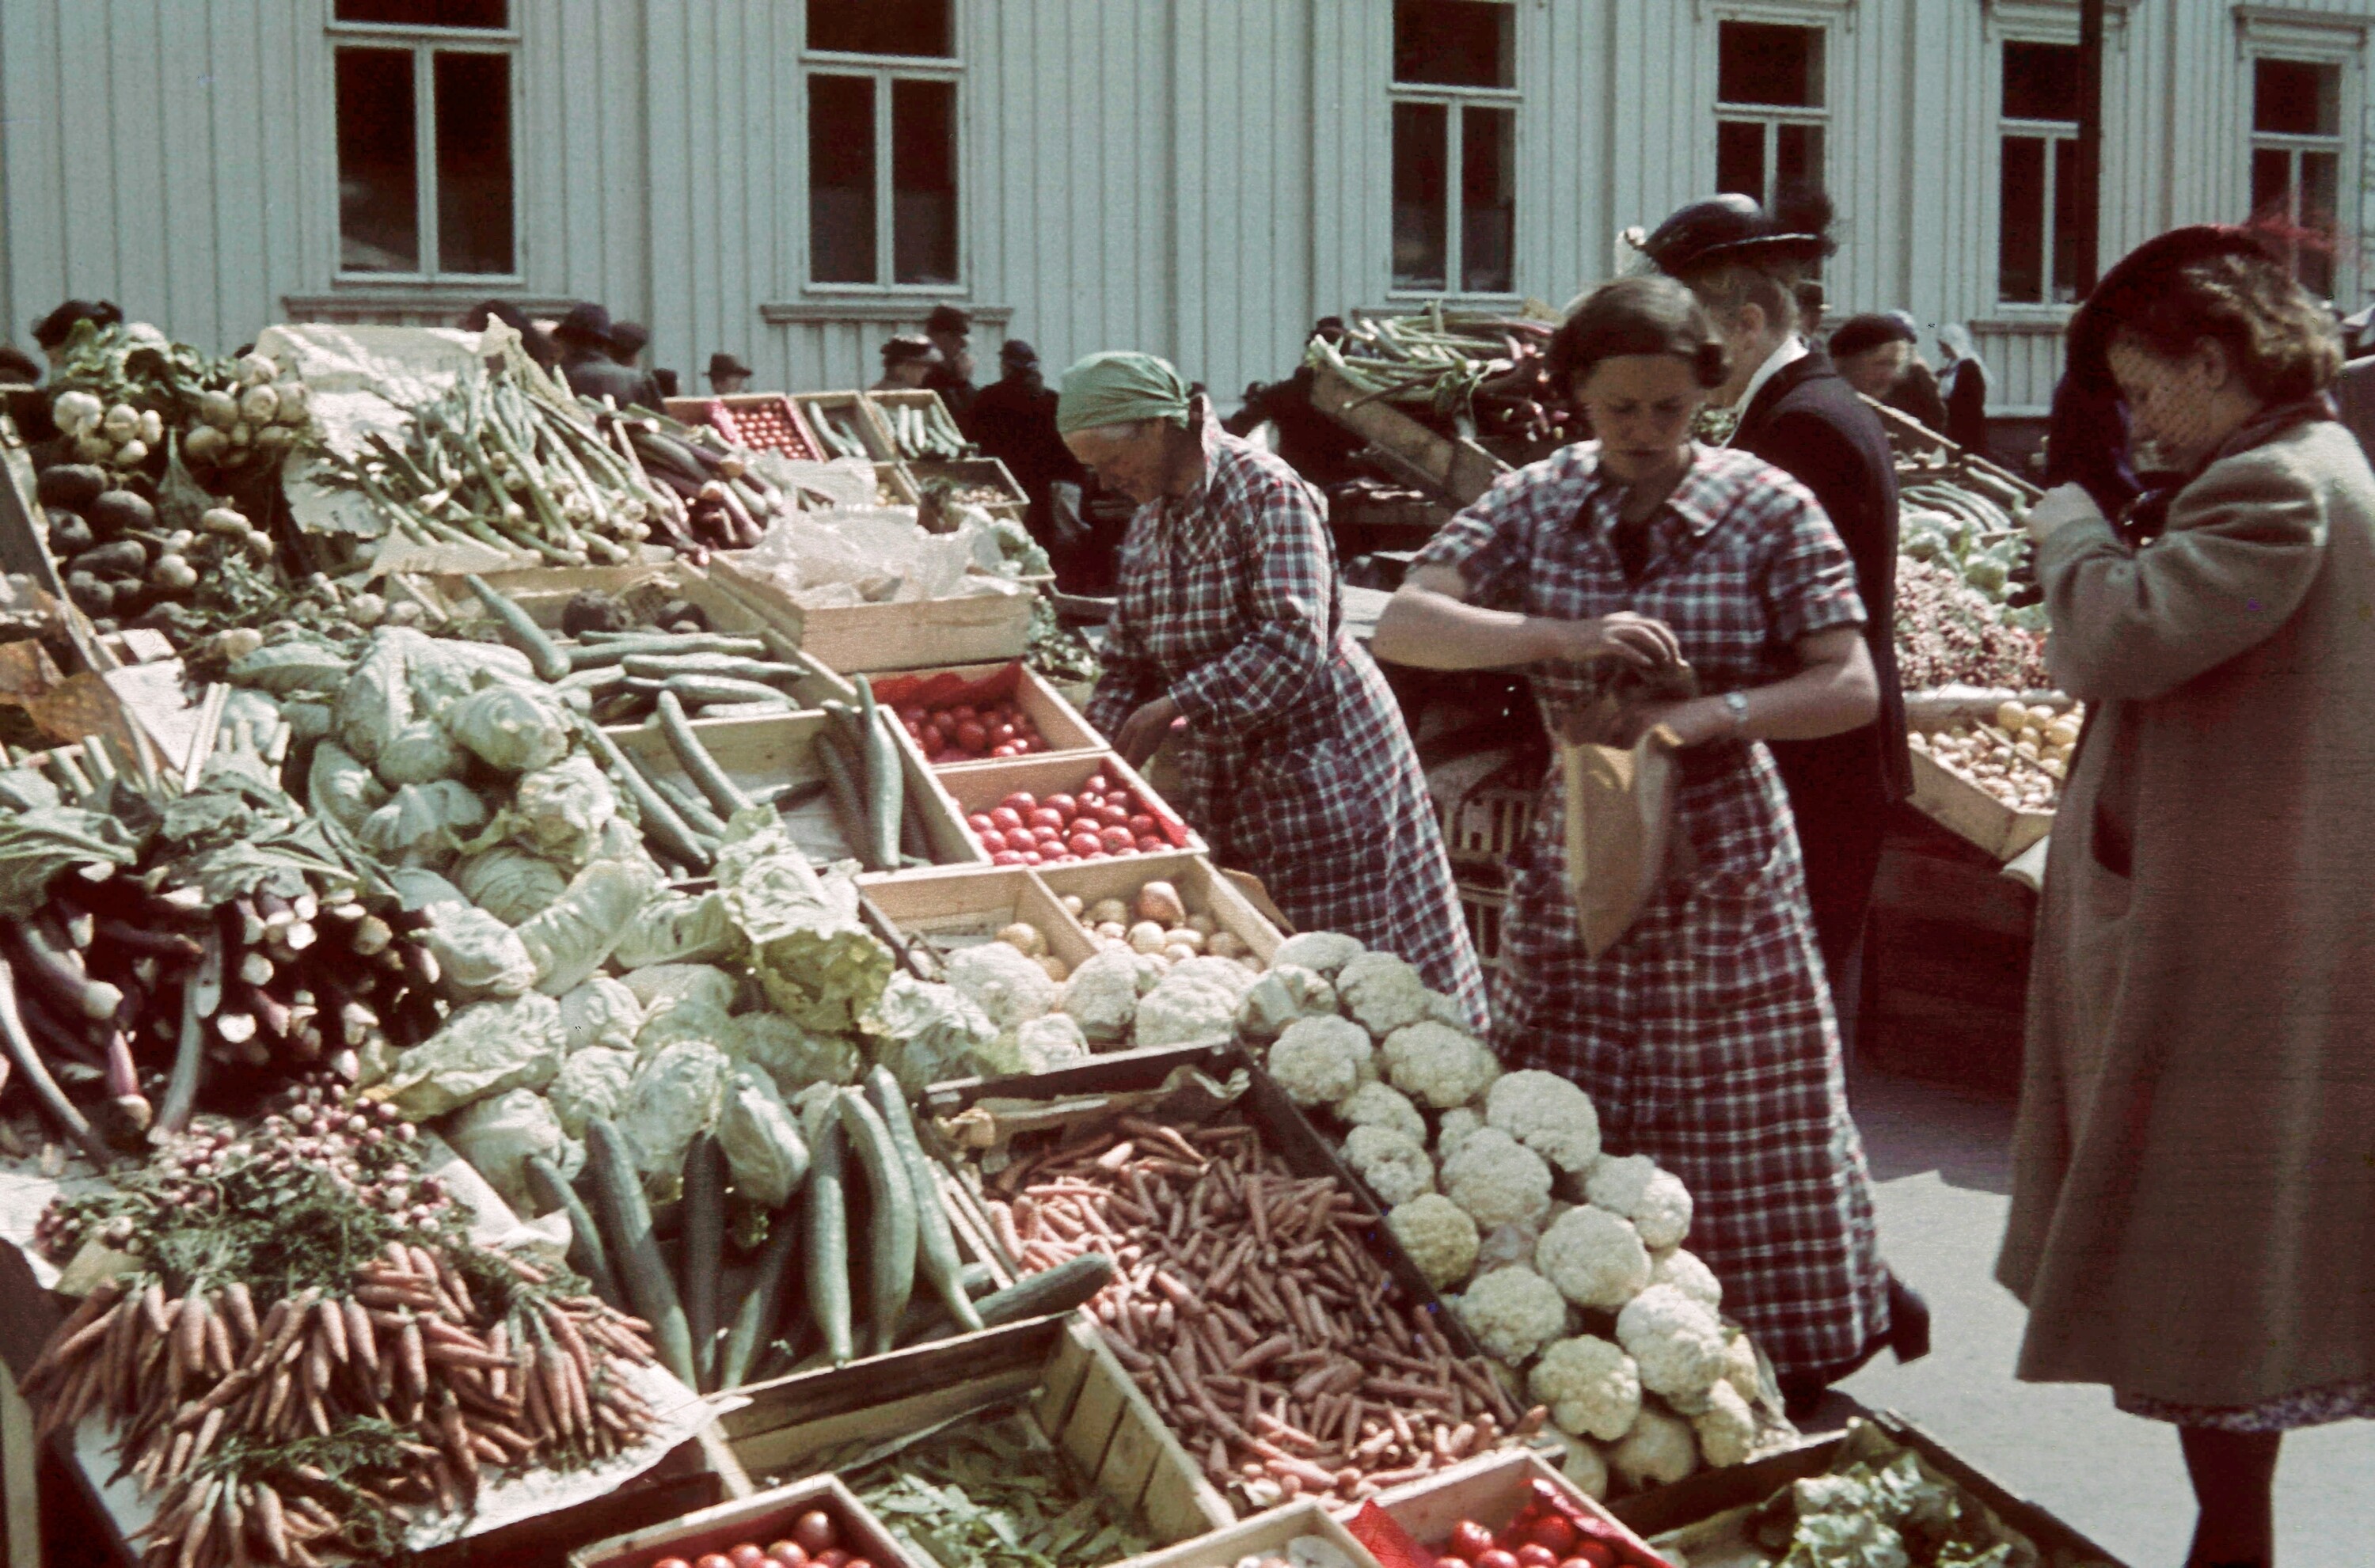 Продажа овощей на главной площади в Тронхейме, Норвегия, ок. 1950. Фотограф Антон Хаакон Уиллман